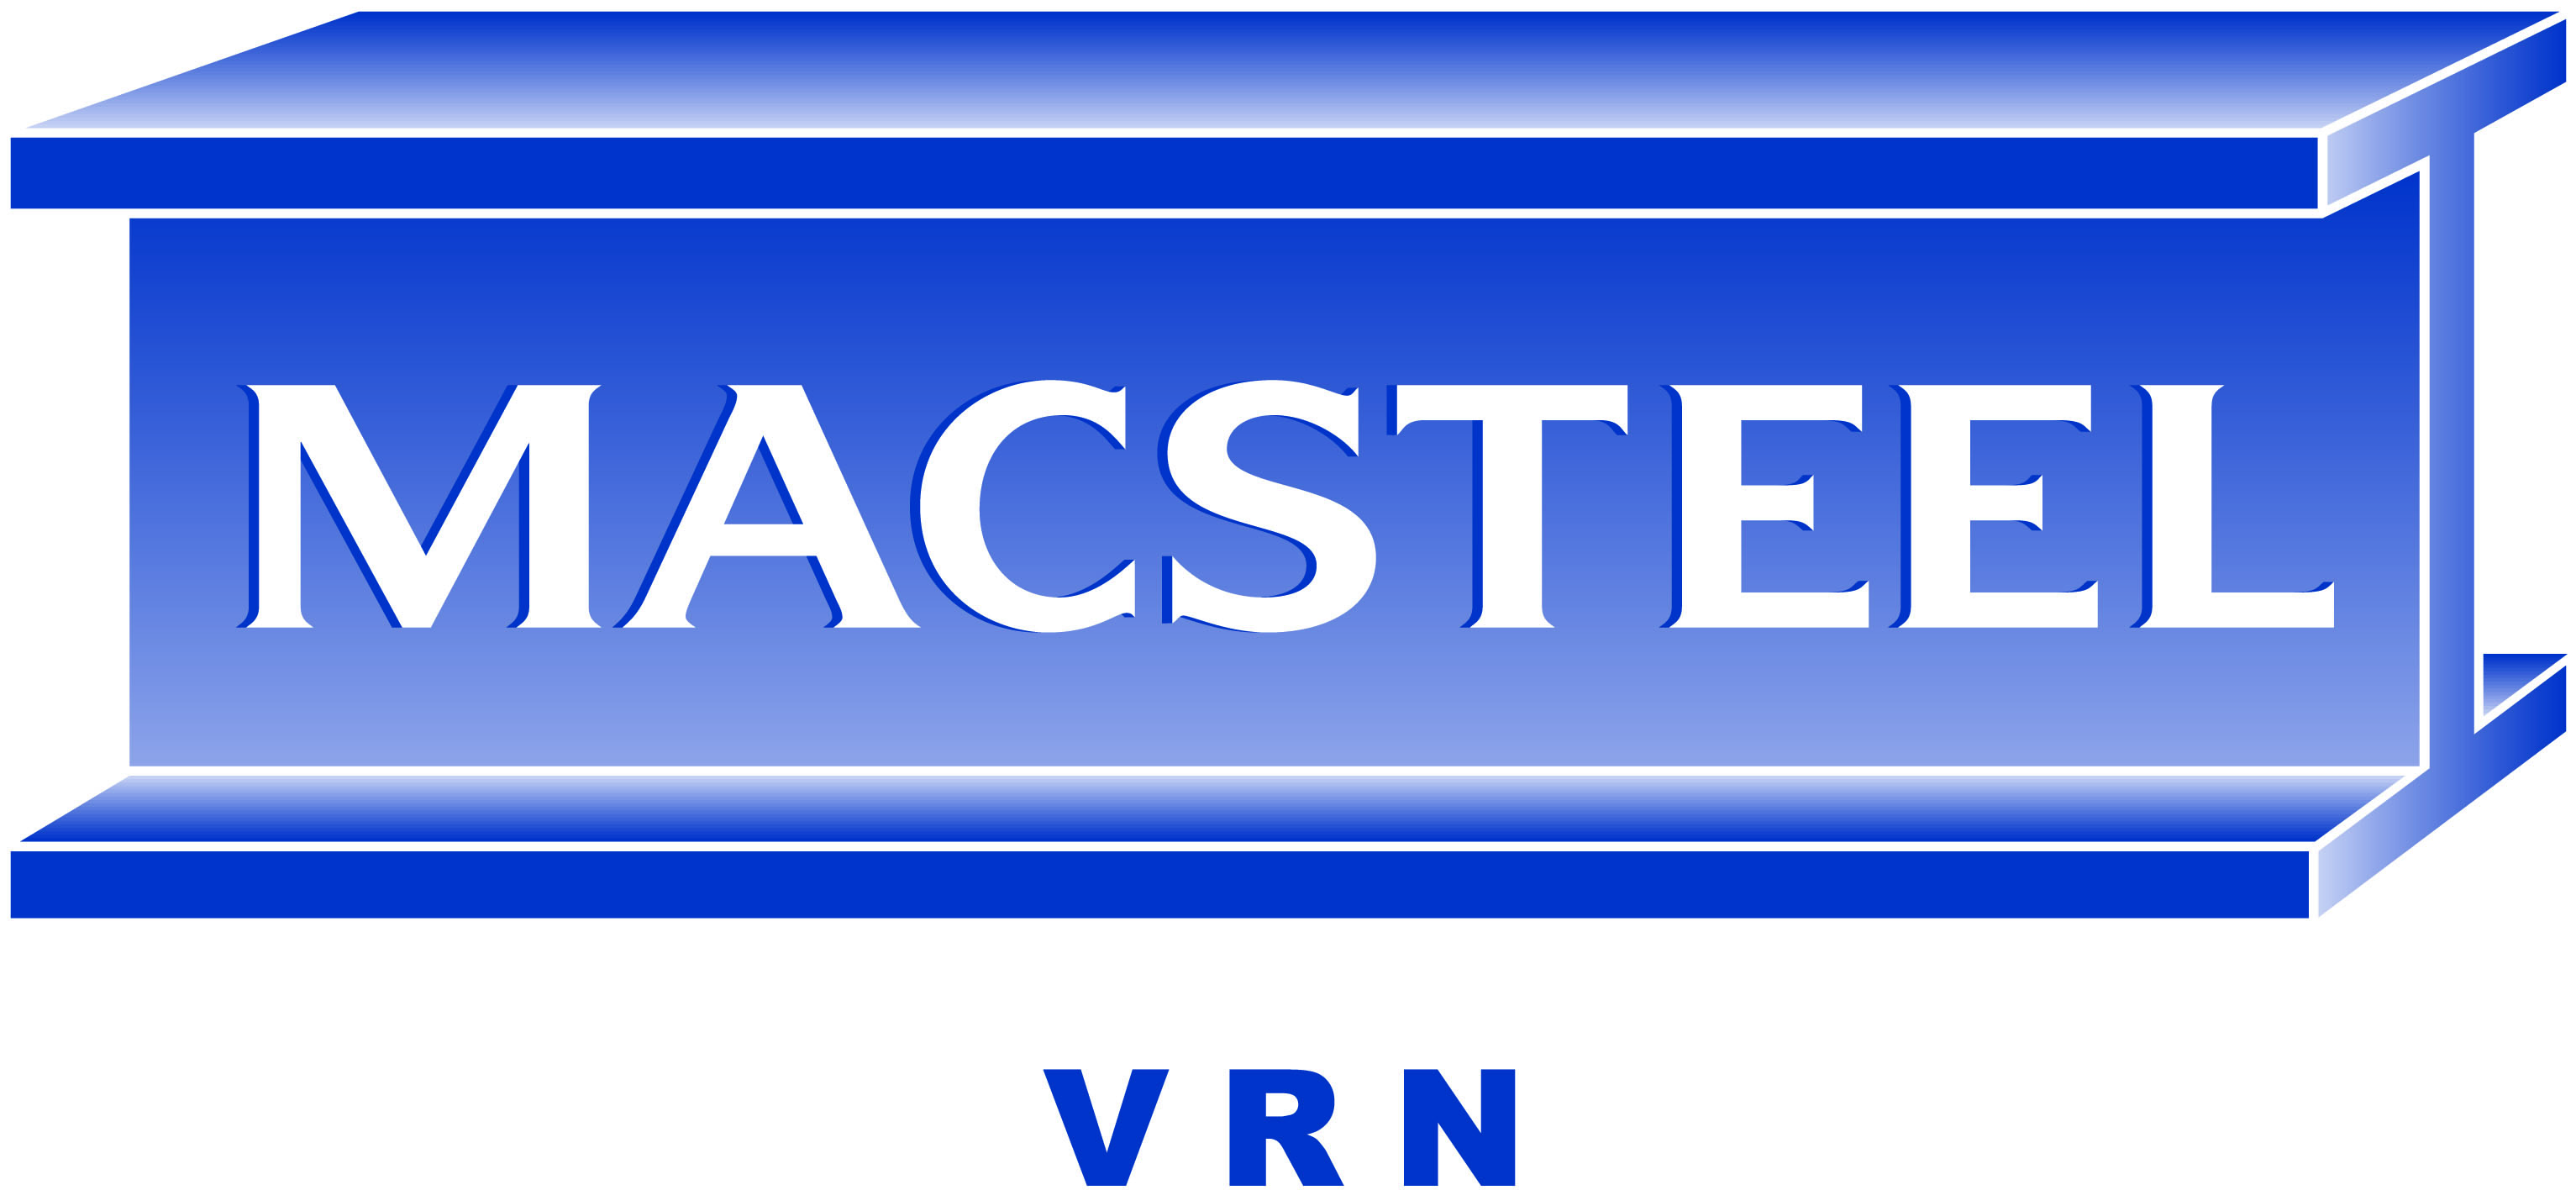 Macsteel Vrn - Cape Town logo